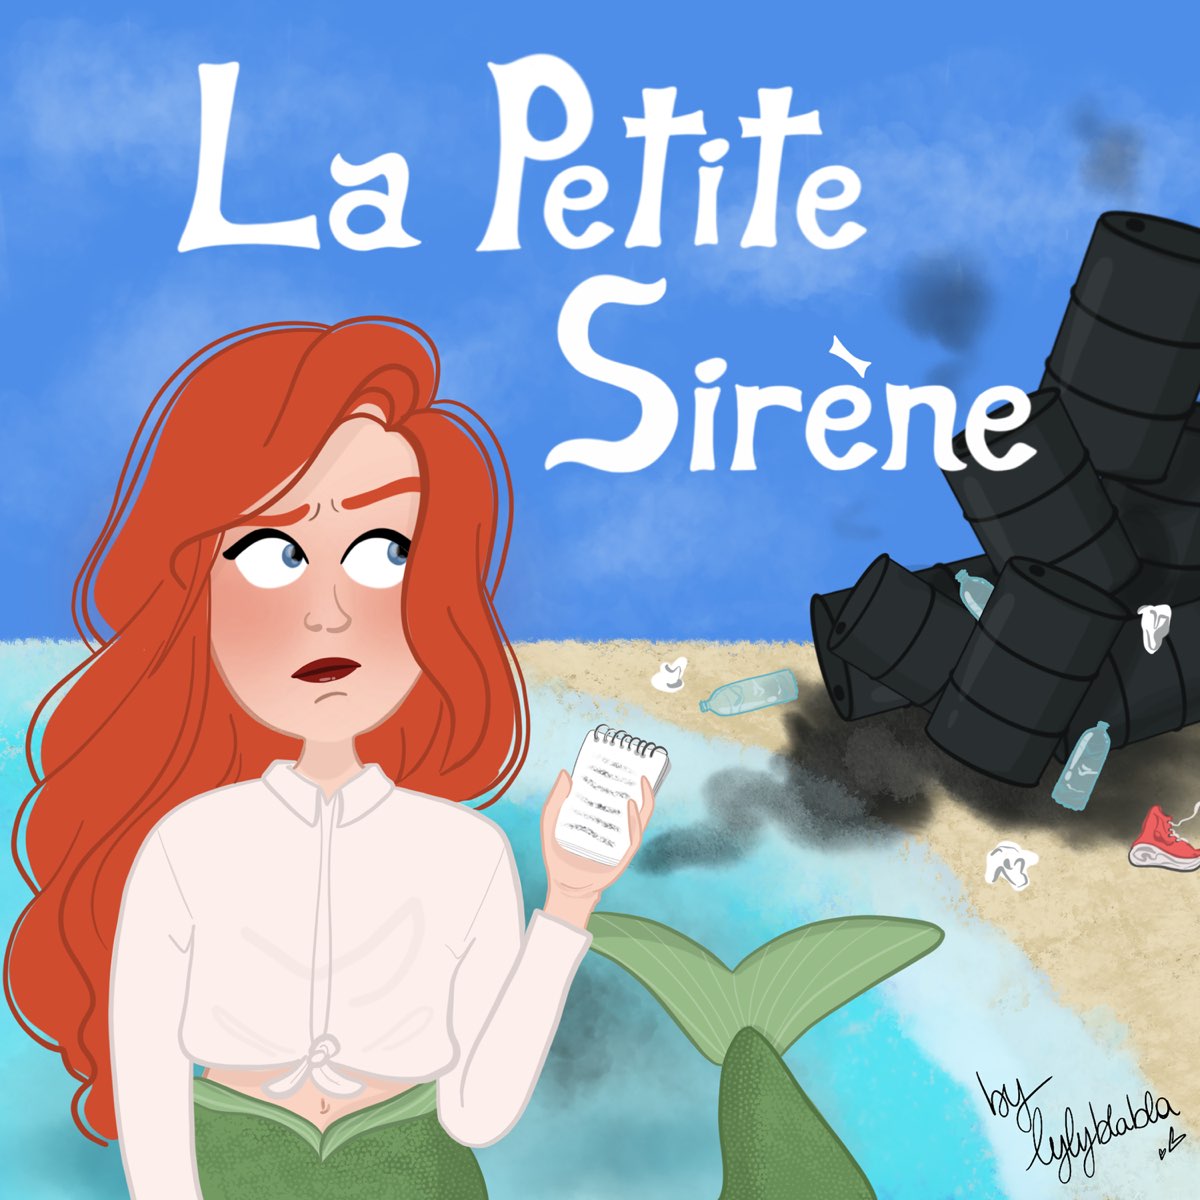 Petite Sirene